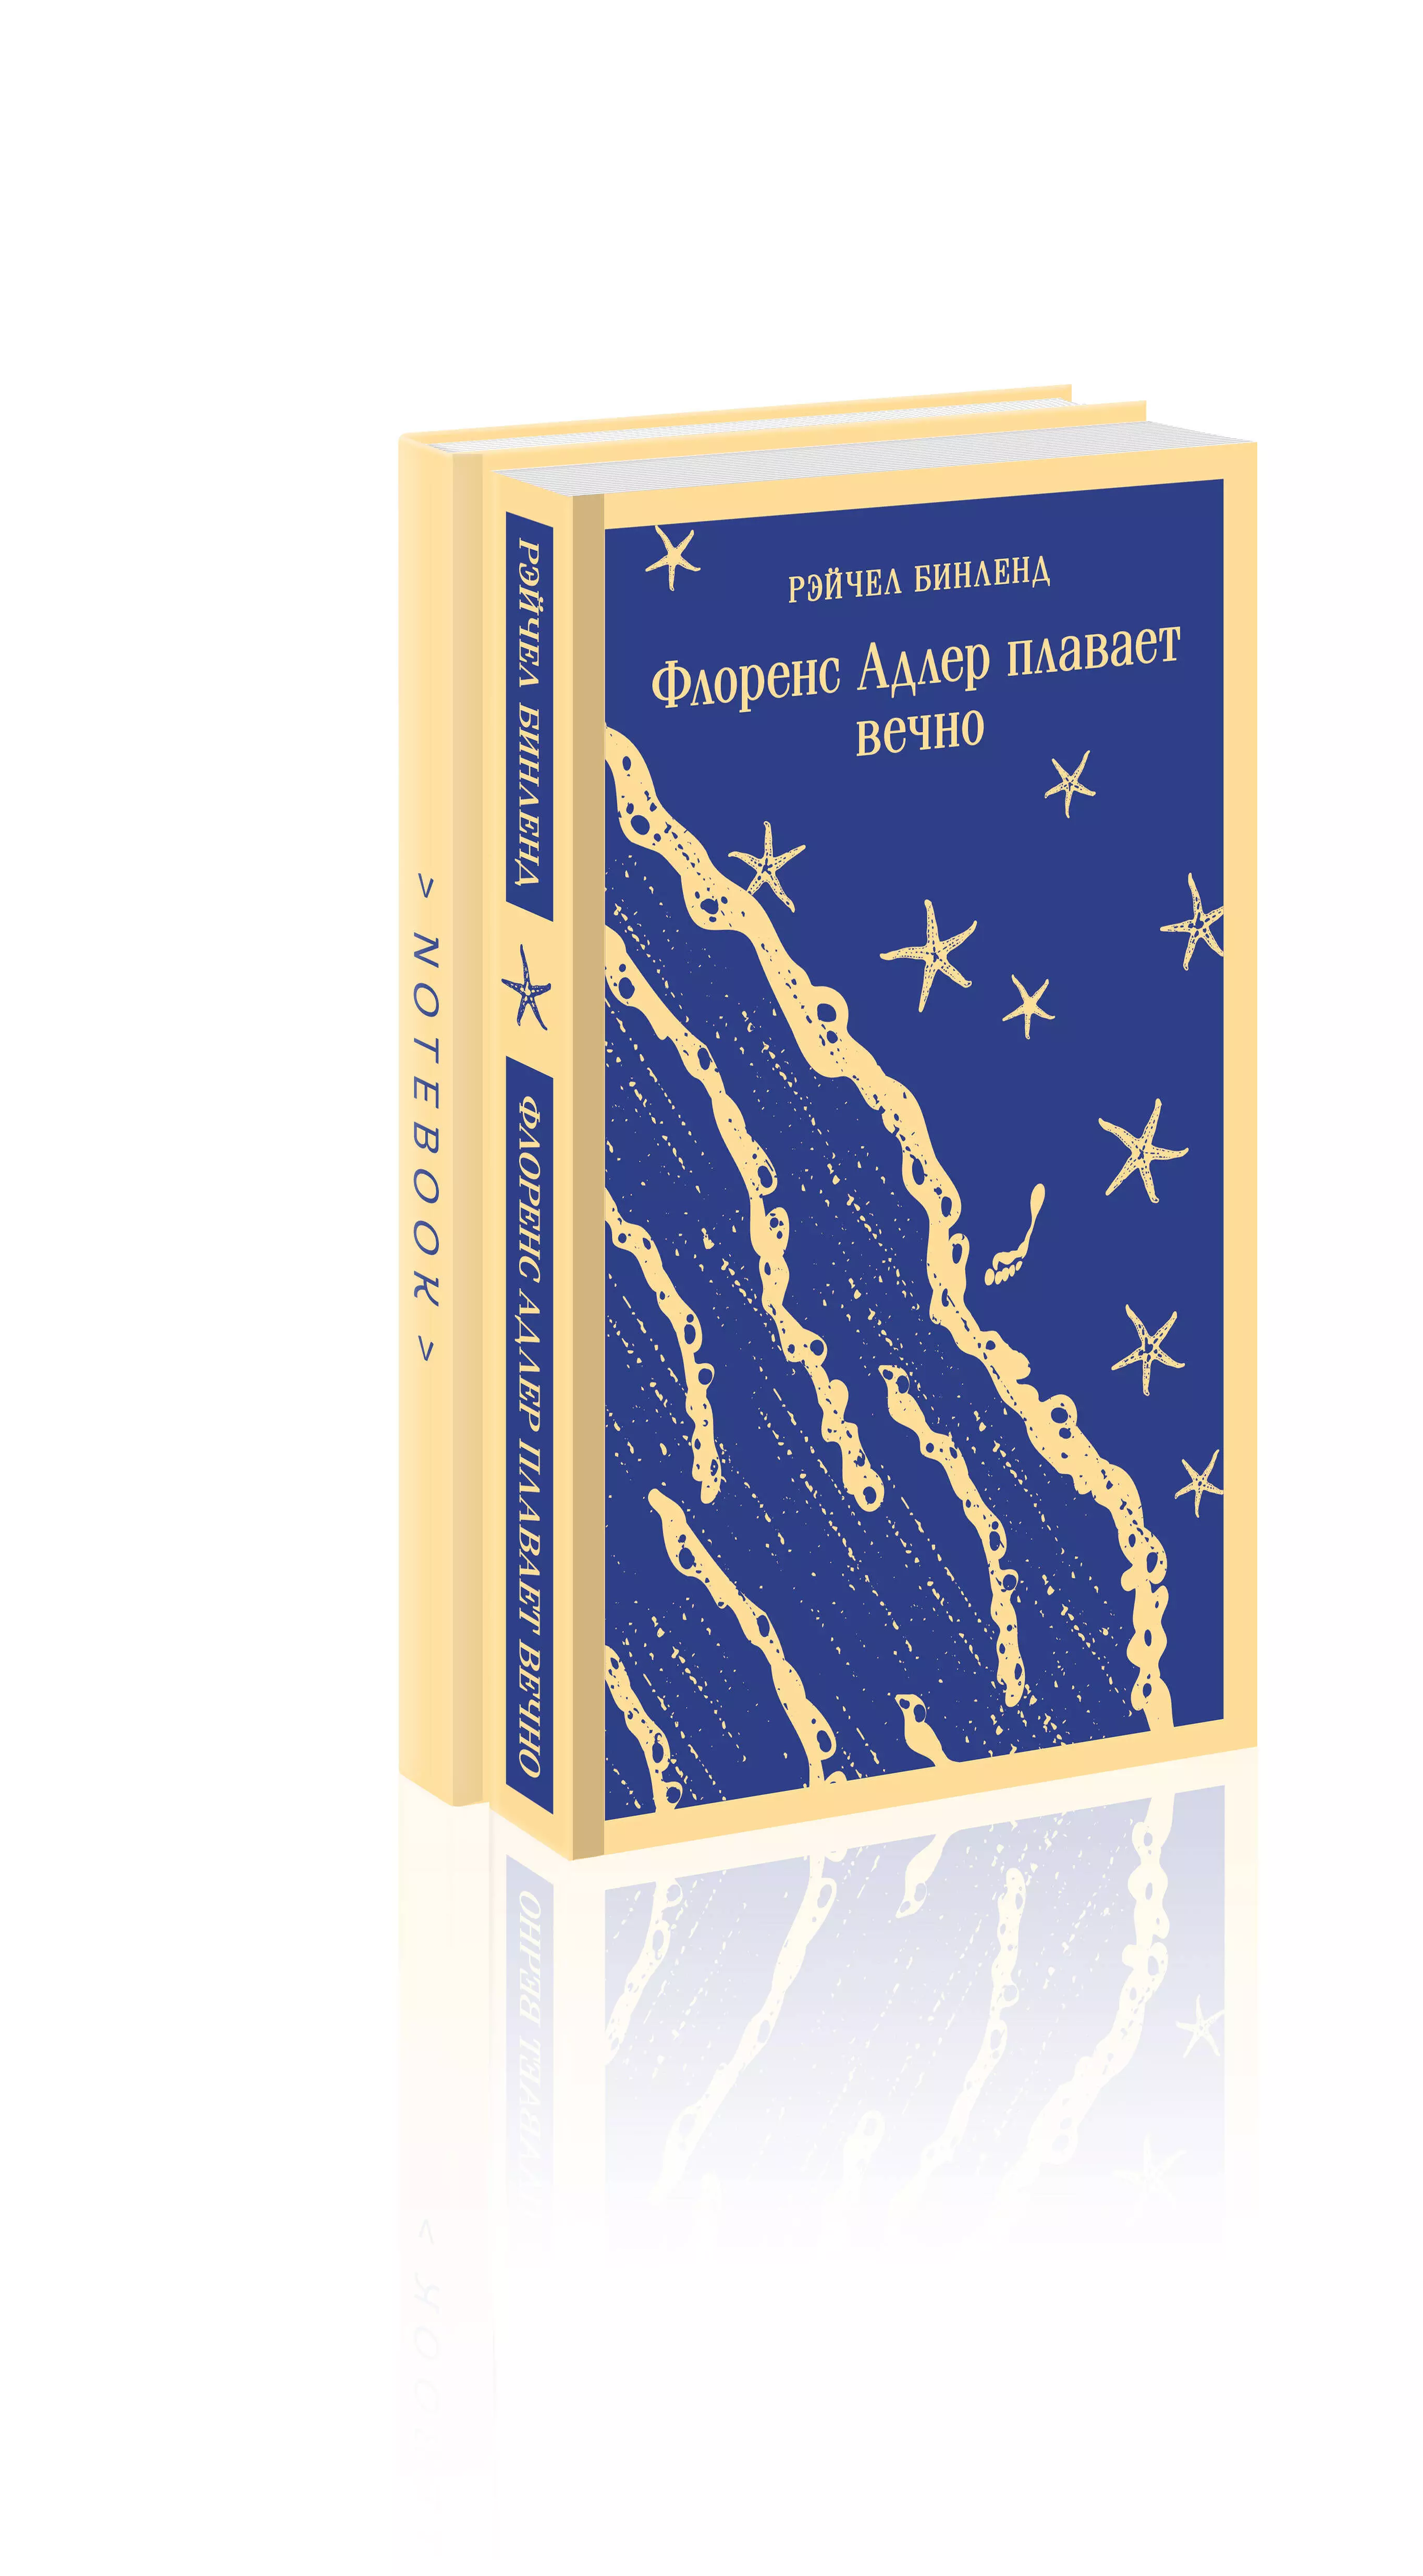 Бинленд Рэйчел Комплект: книга + блокнот: «Флоренс Адлер плавает вечно» и тематический блокнот «Море и звезды» (комплект из 2-х предметов)